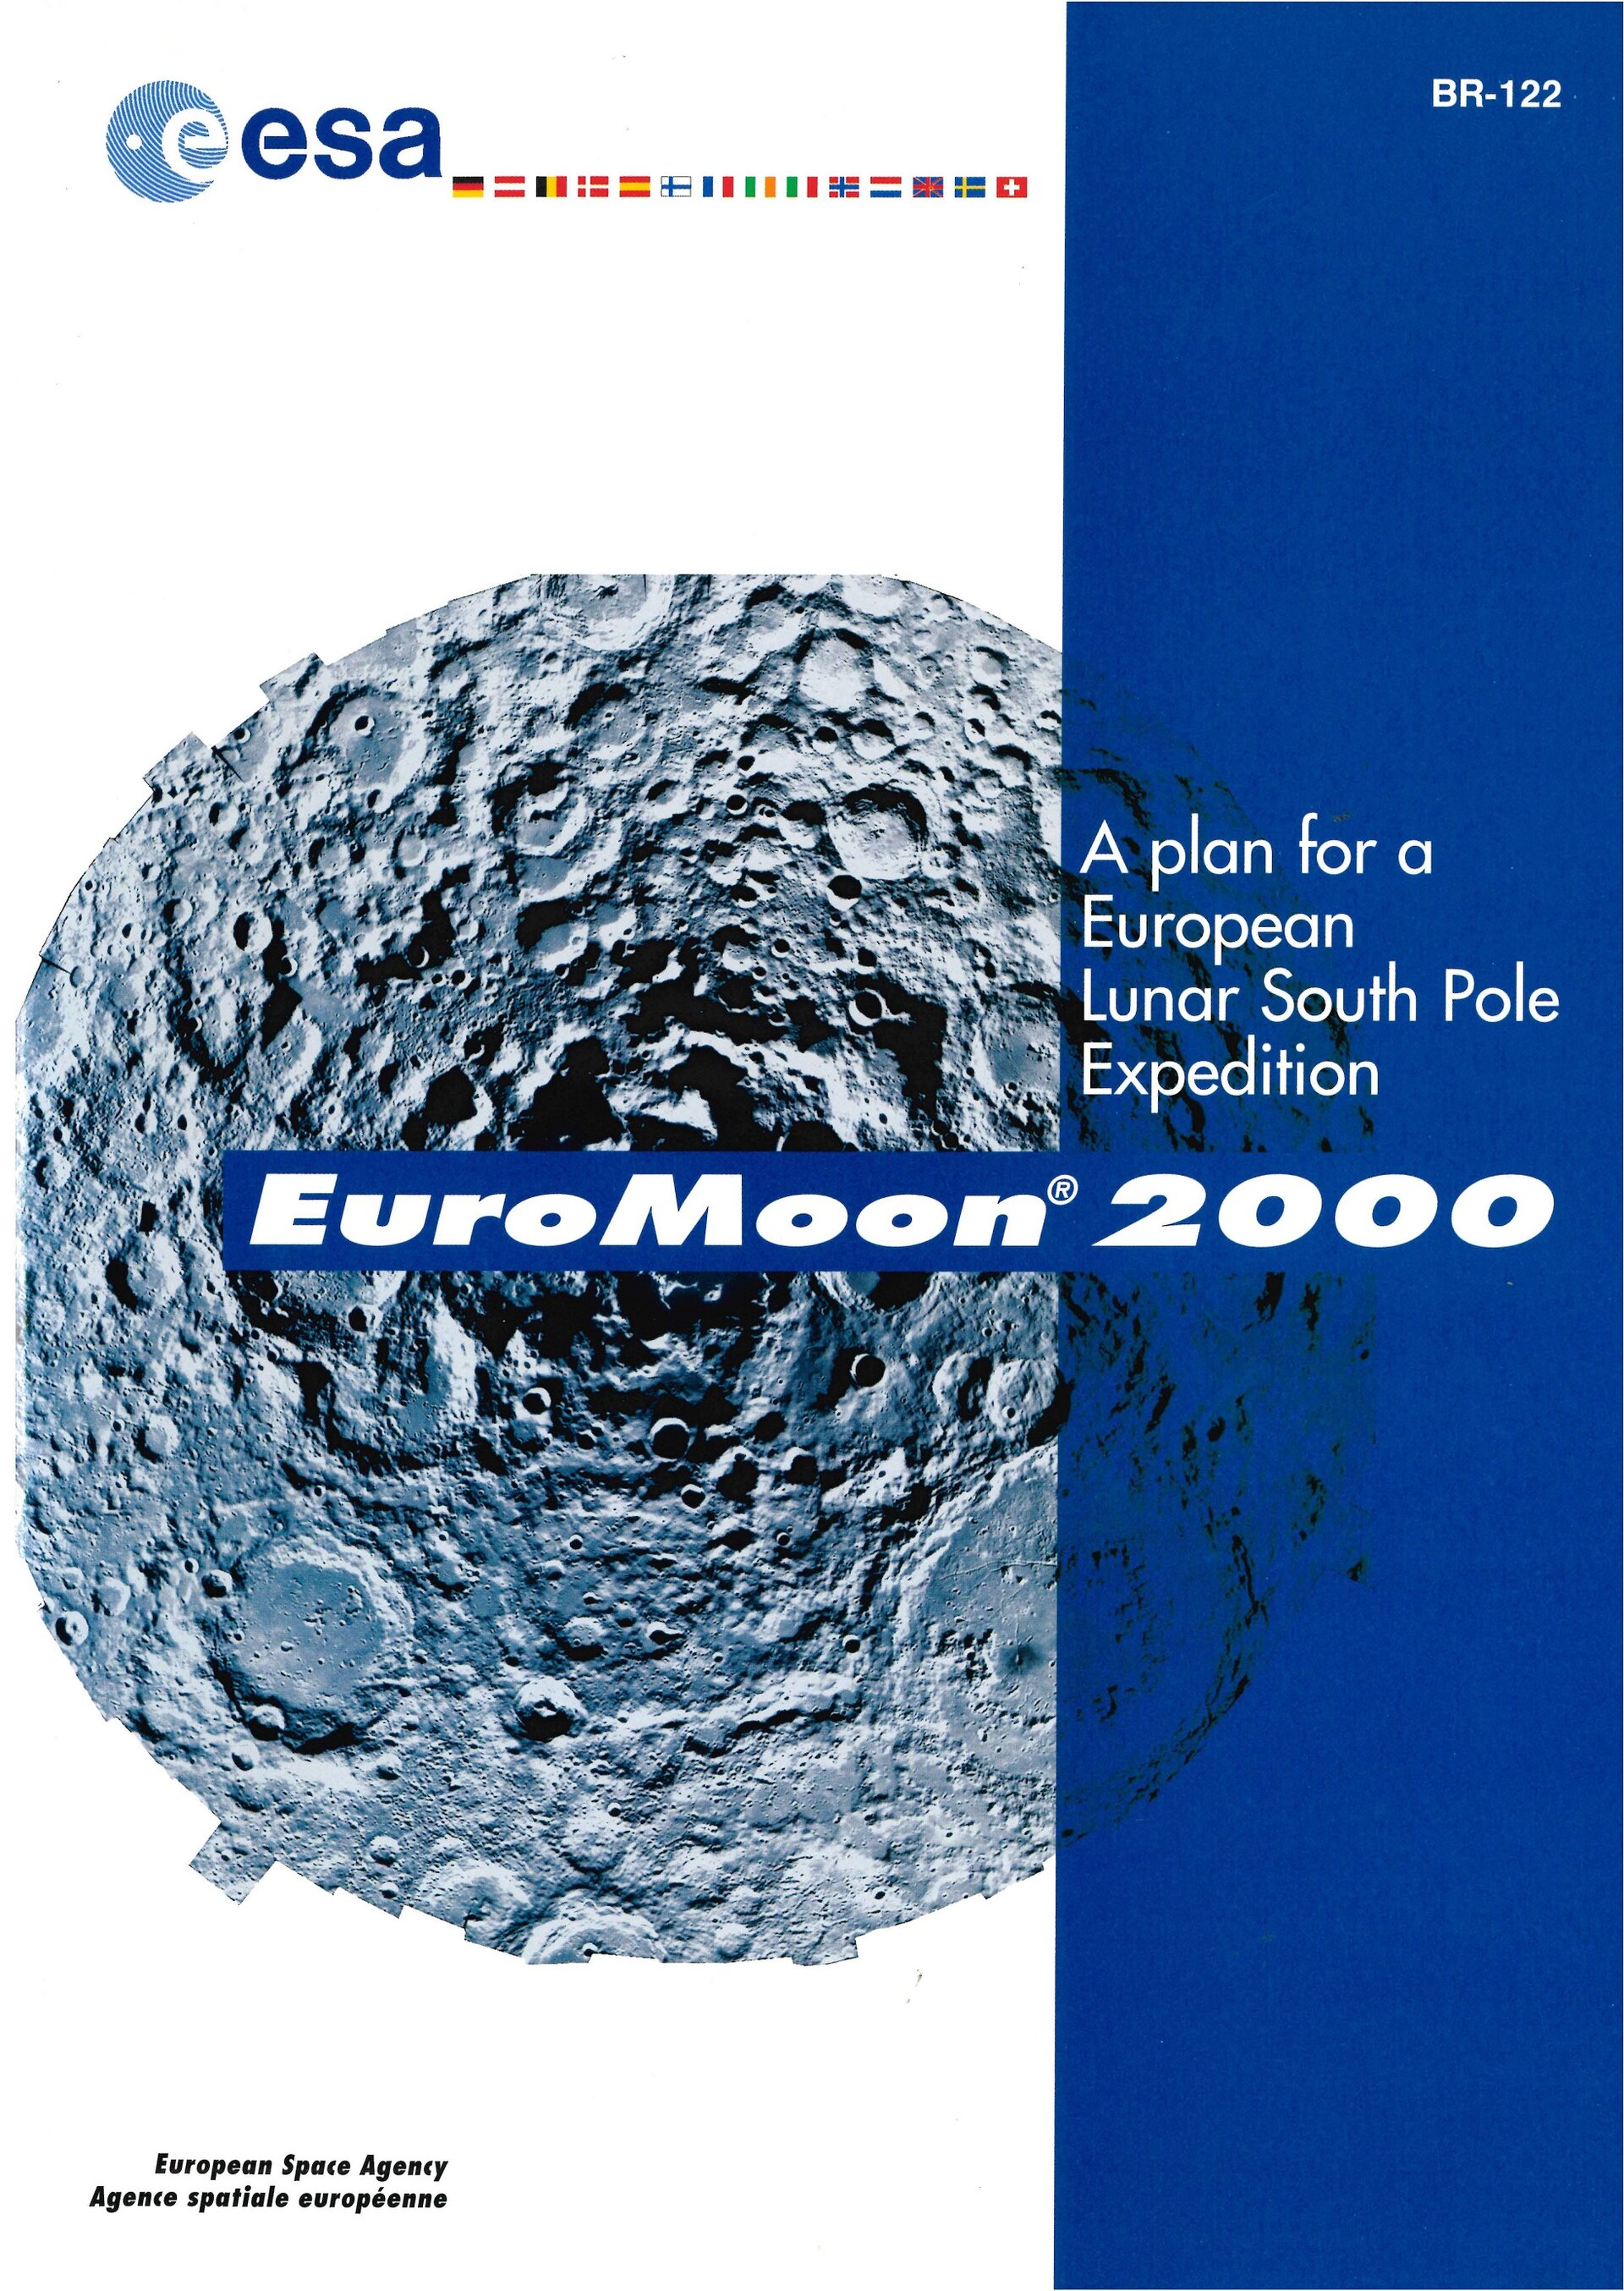 BR-122: EuroMoon 2000